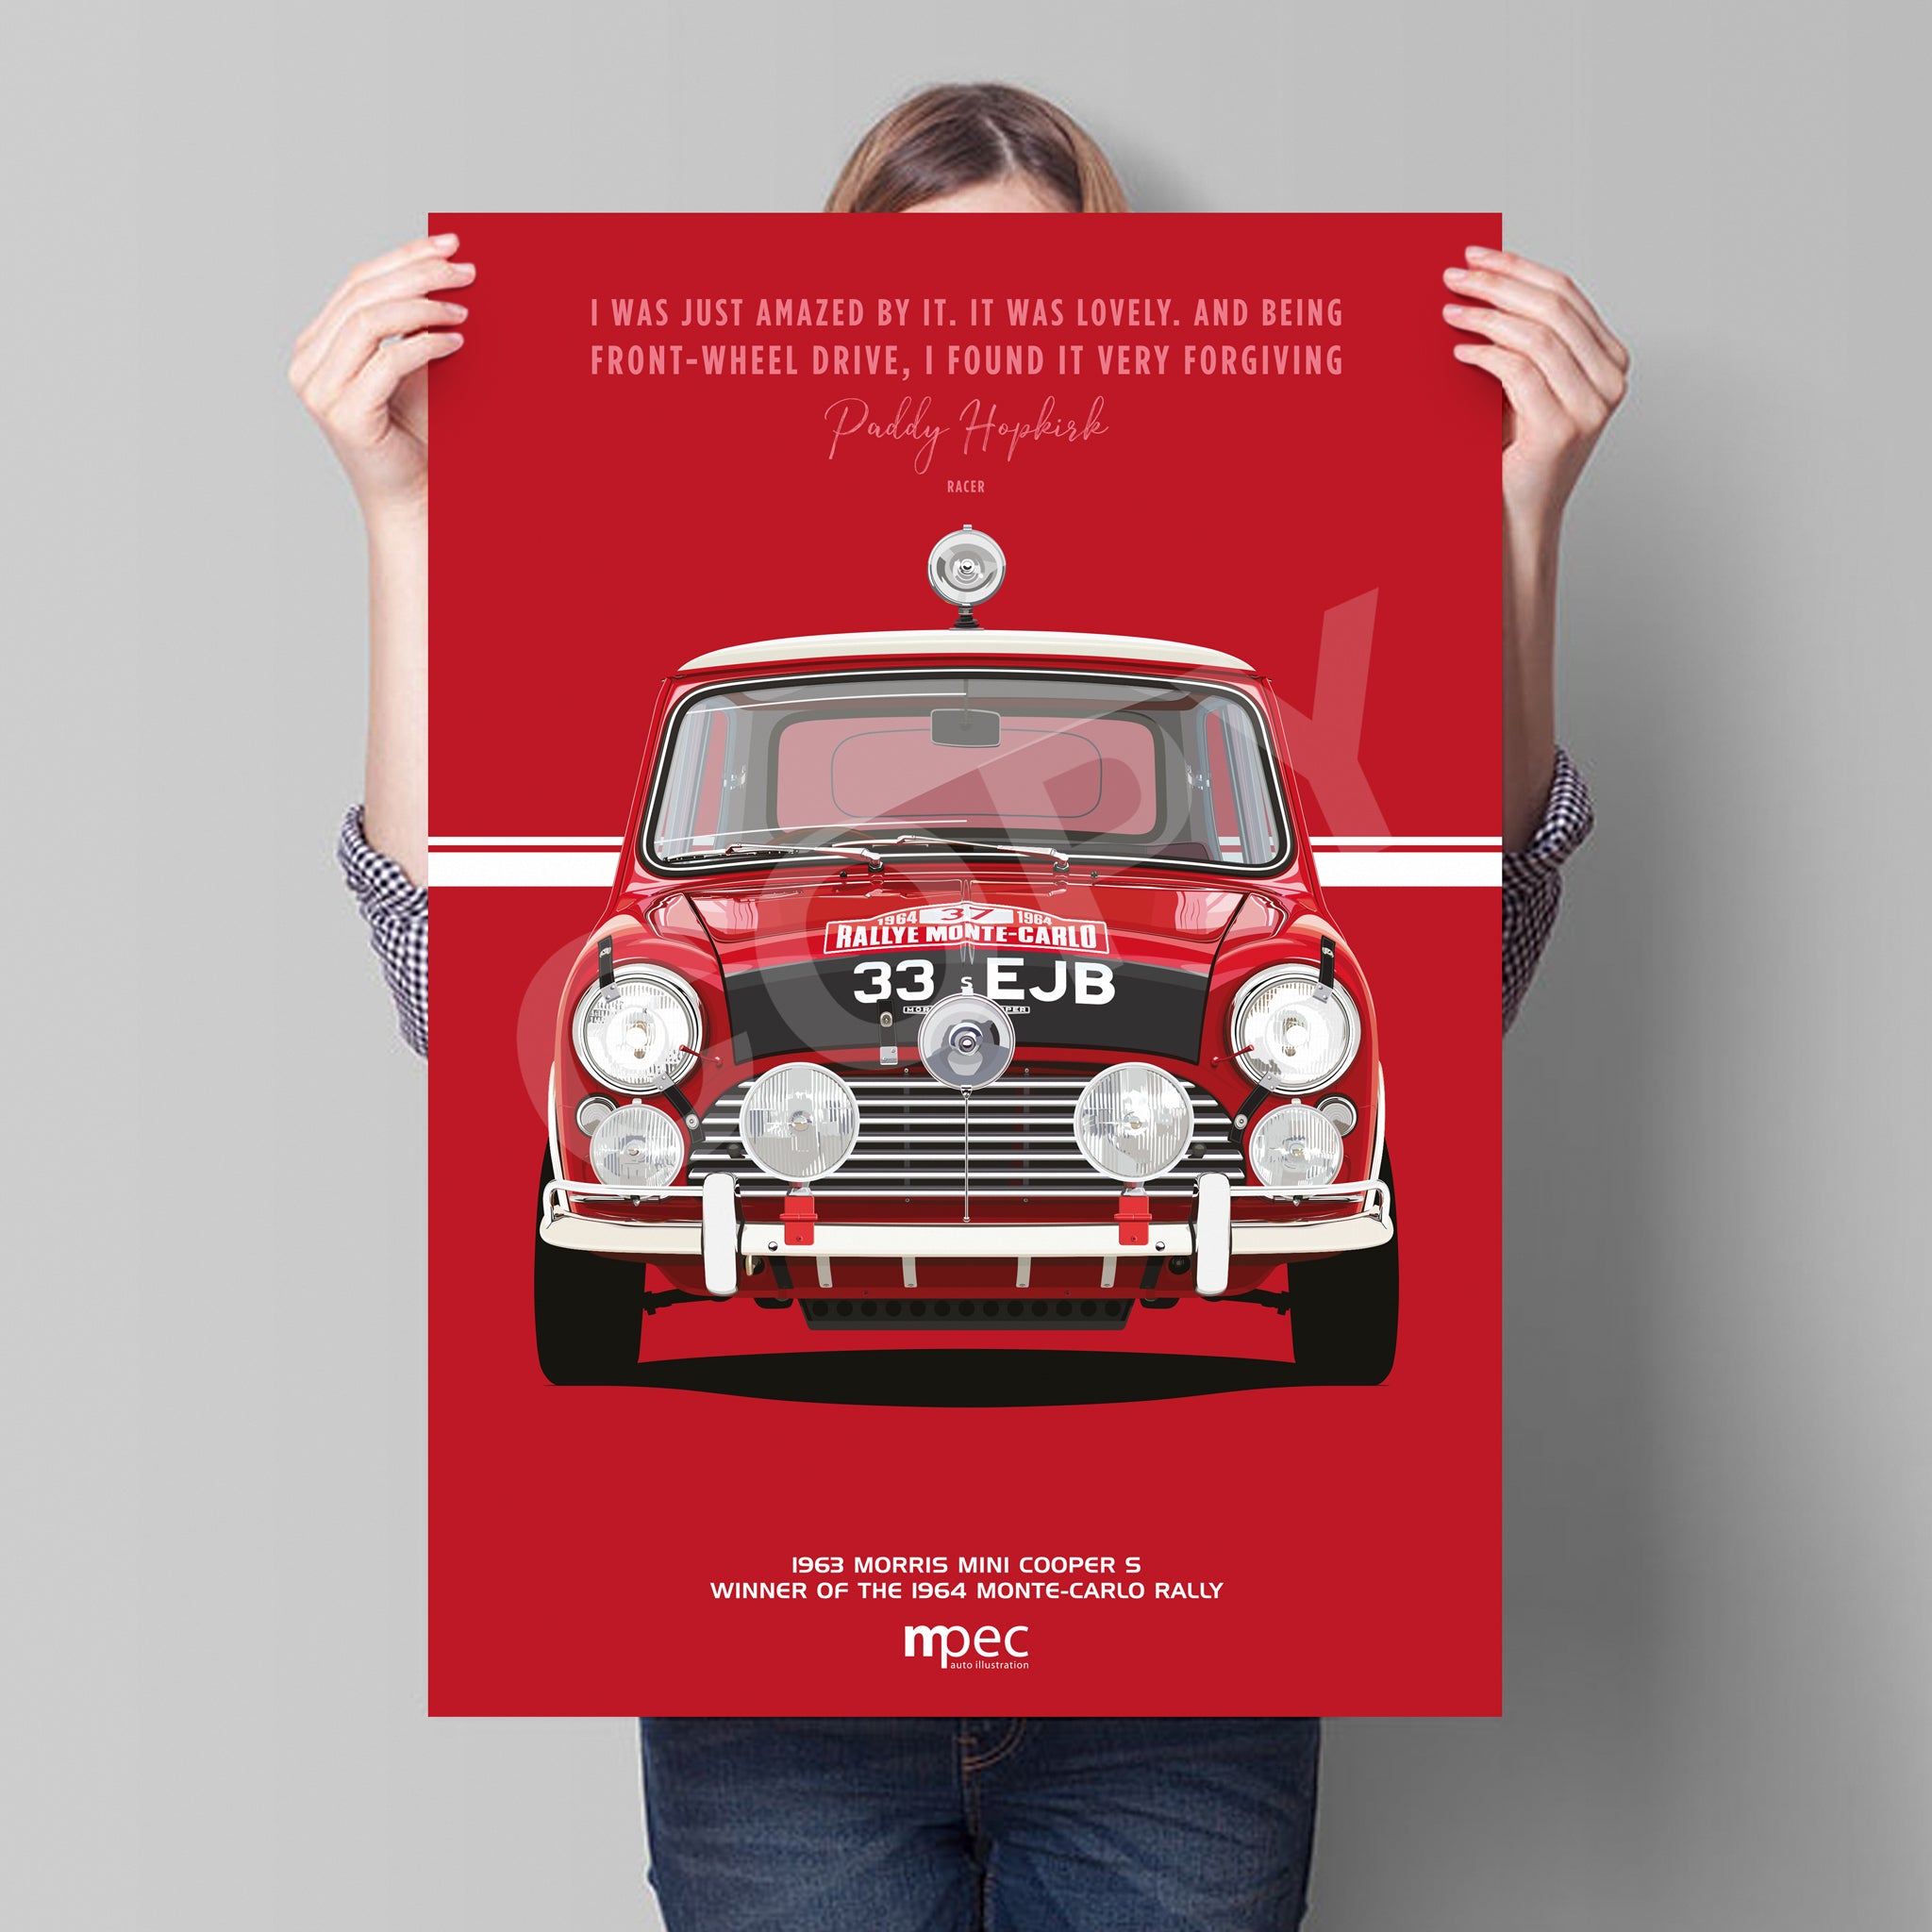 Illustration 1963 Morris Mini Cooper S 1964 Monte-Carlo Rally Winner 3 –  mpecautoillustration